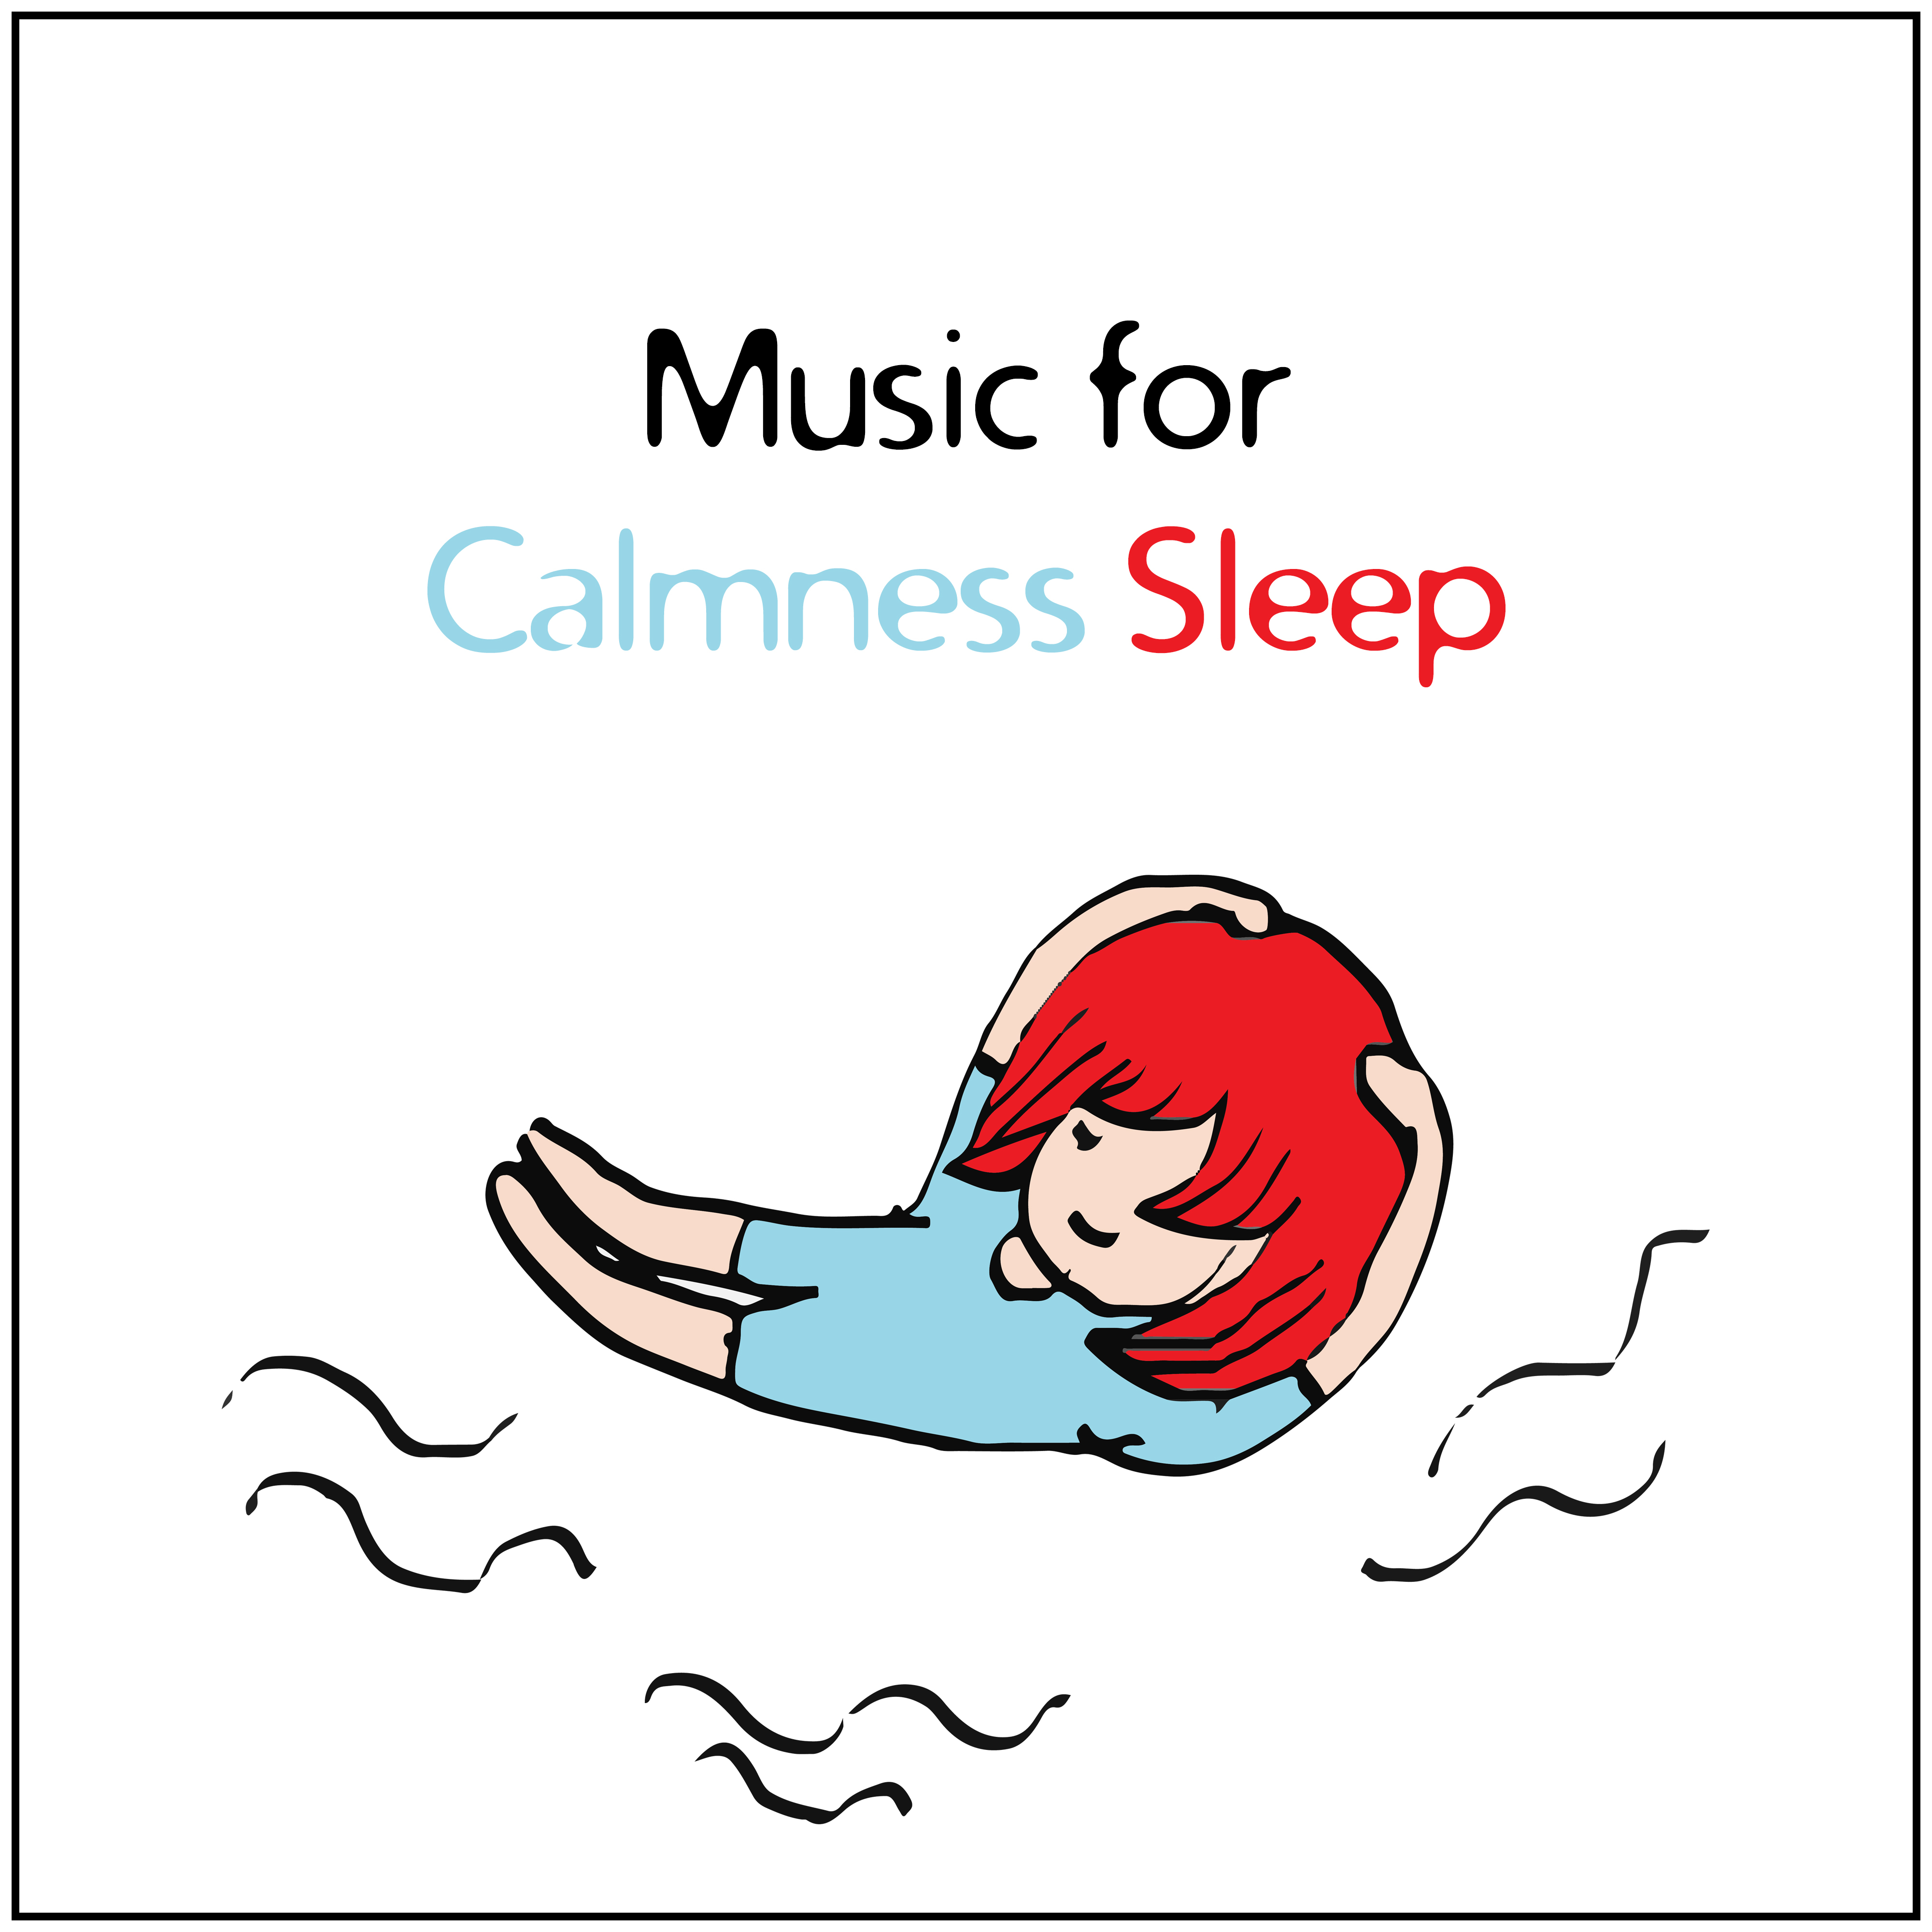 Music for Calmness Sleep  Dreaming Hours, Sleep Well, Self Rest, Harmony